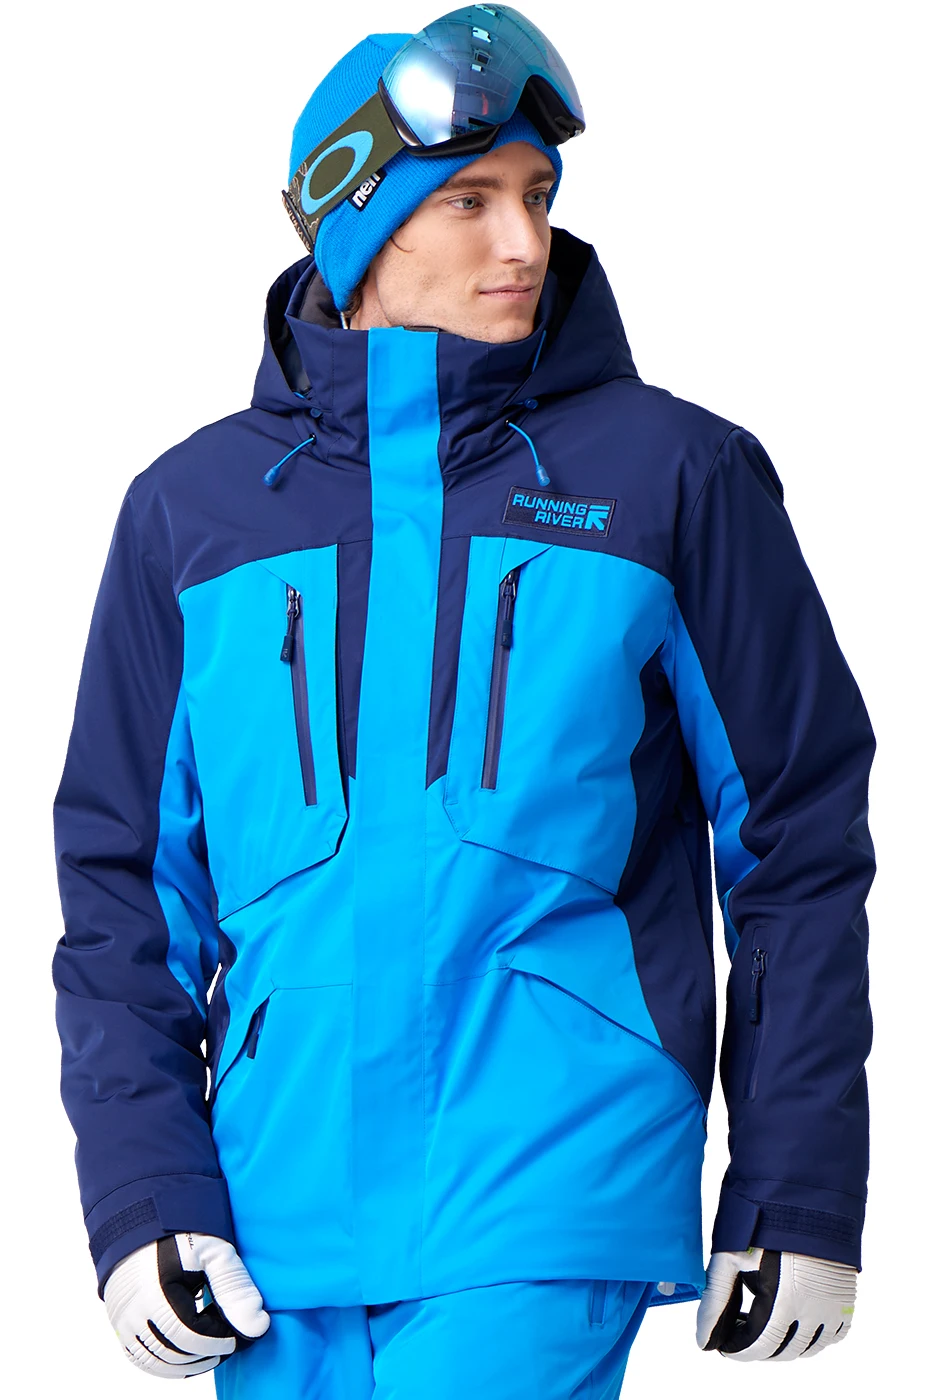 Dicks sporting goods mens ski jackets